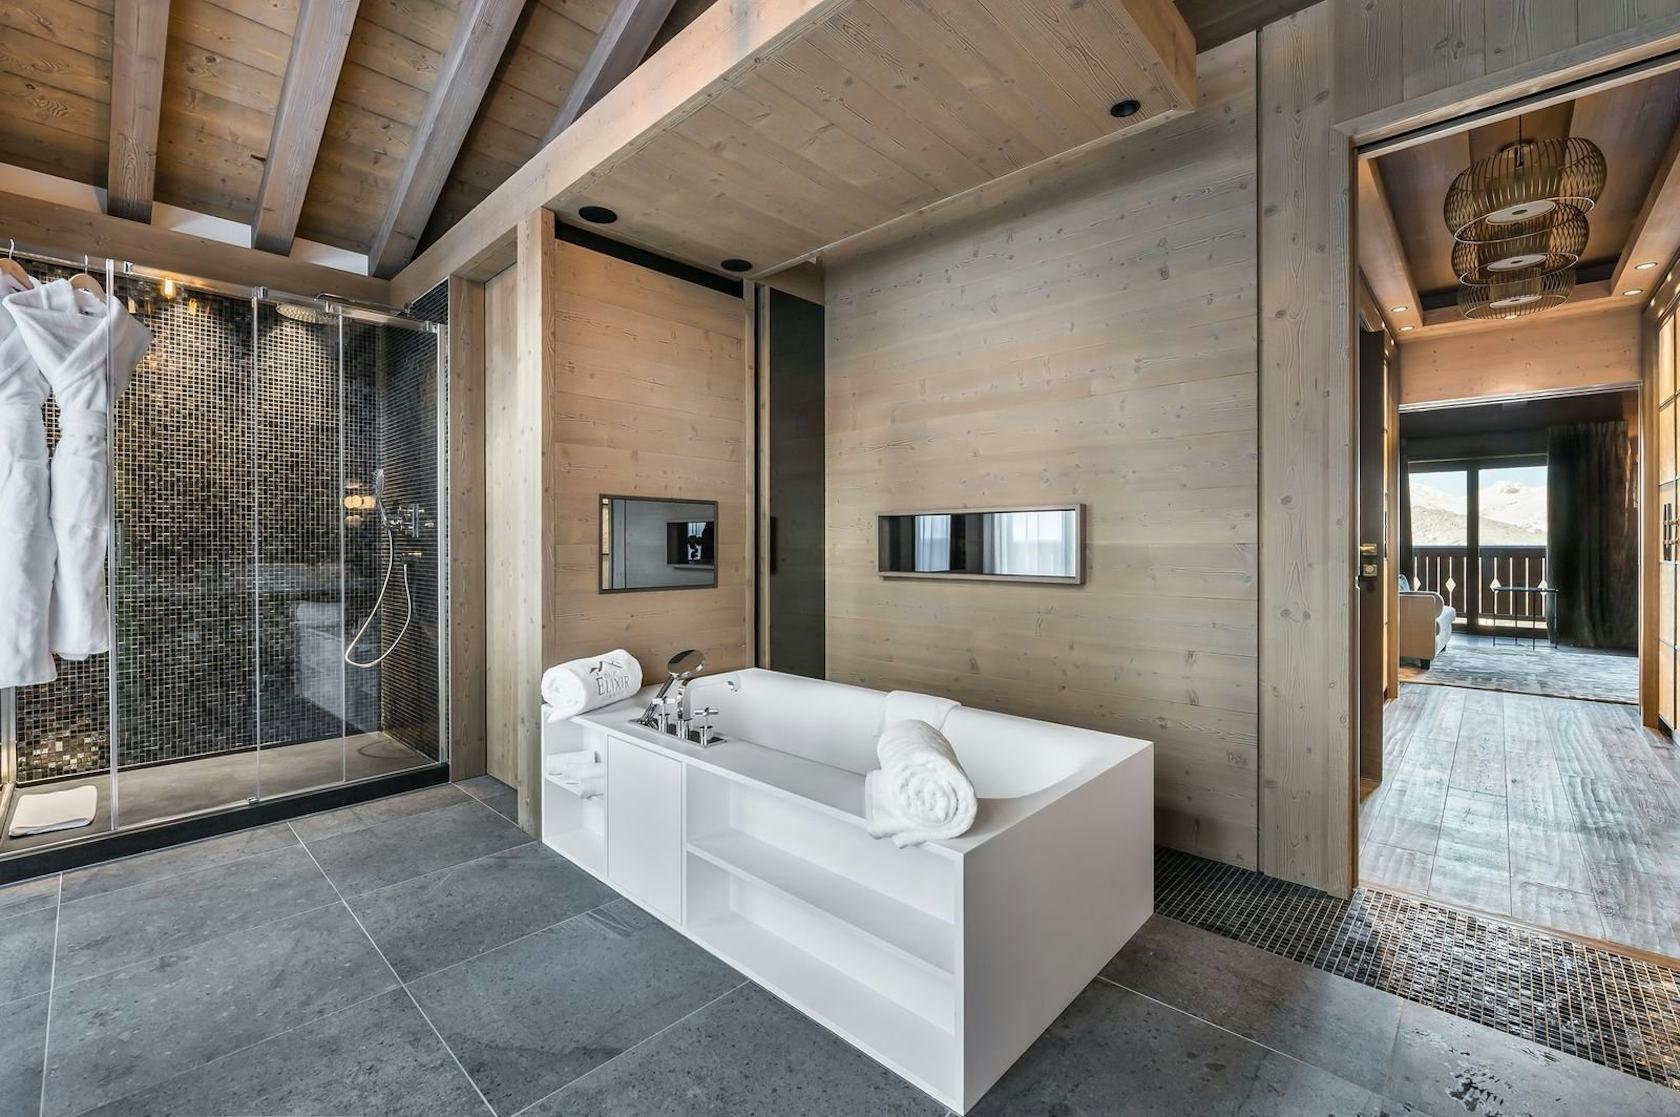 indoors room bathtub tub interior design